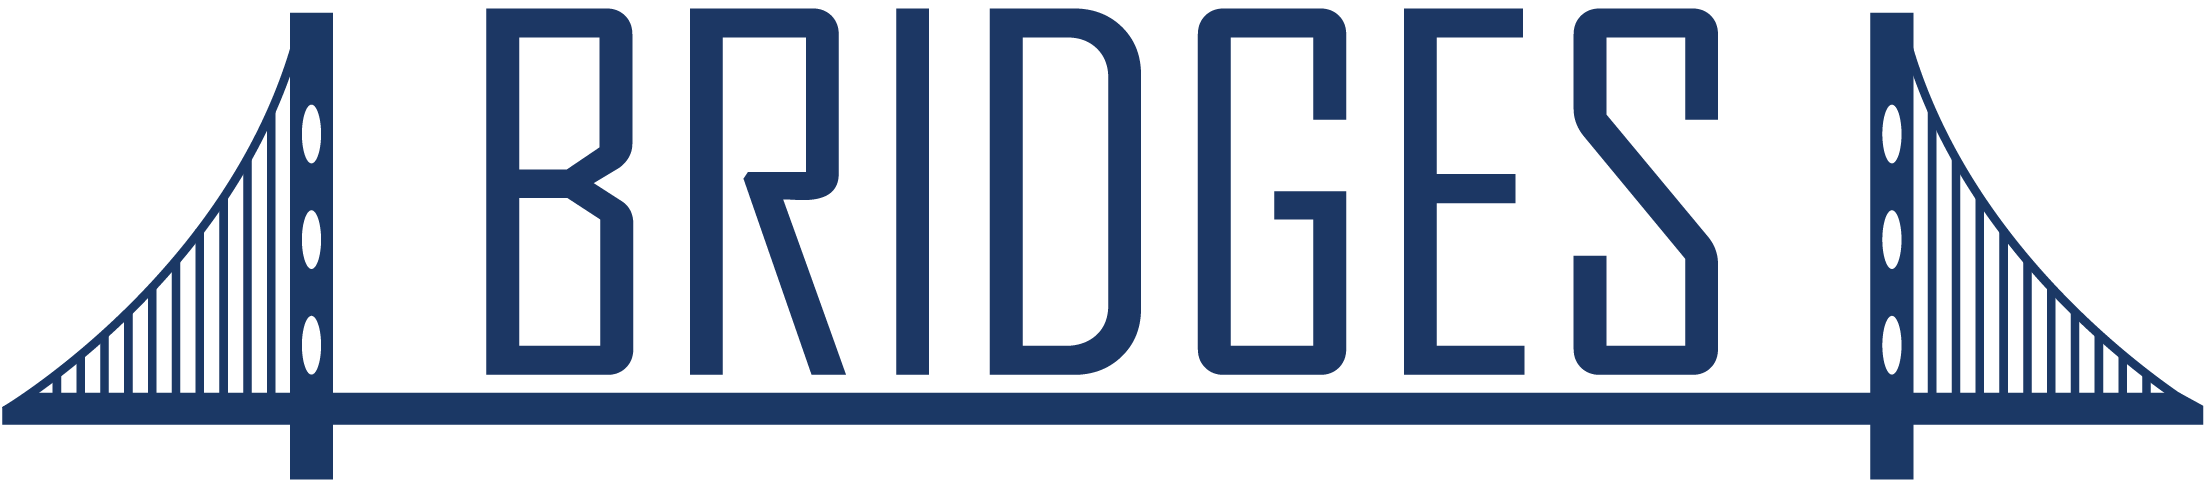 BRIDGES Logo.png